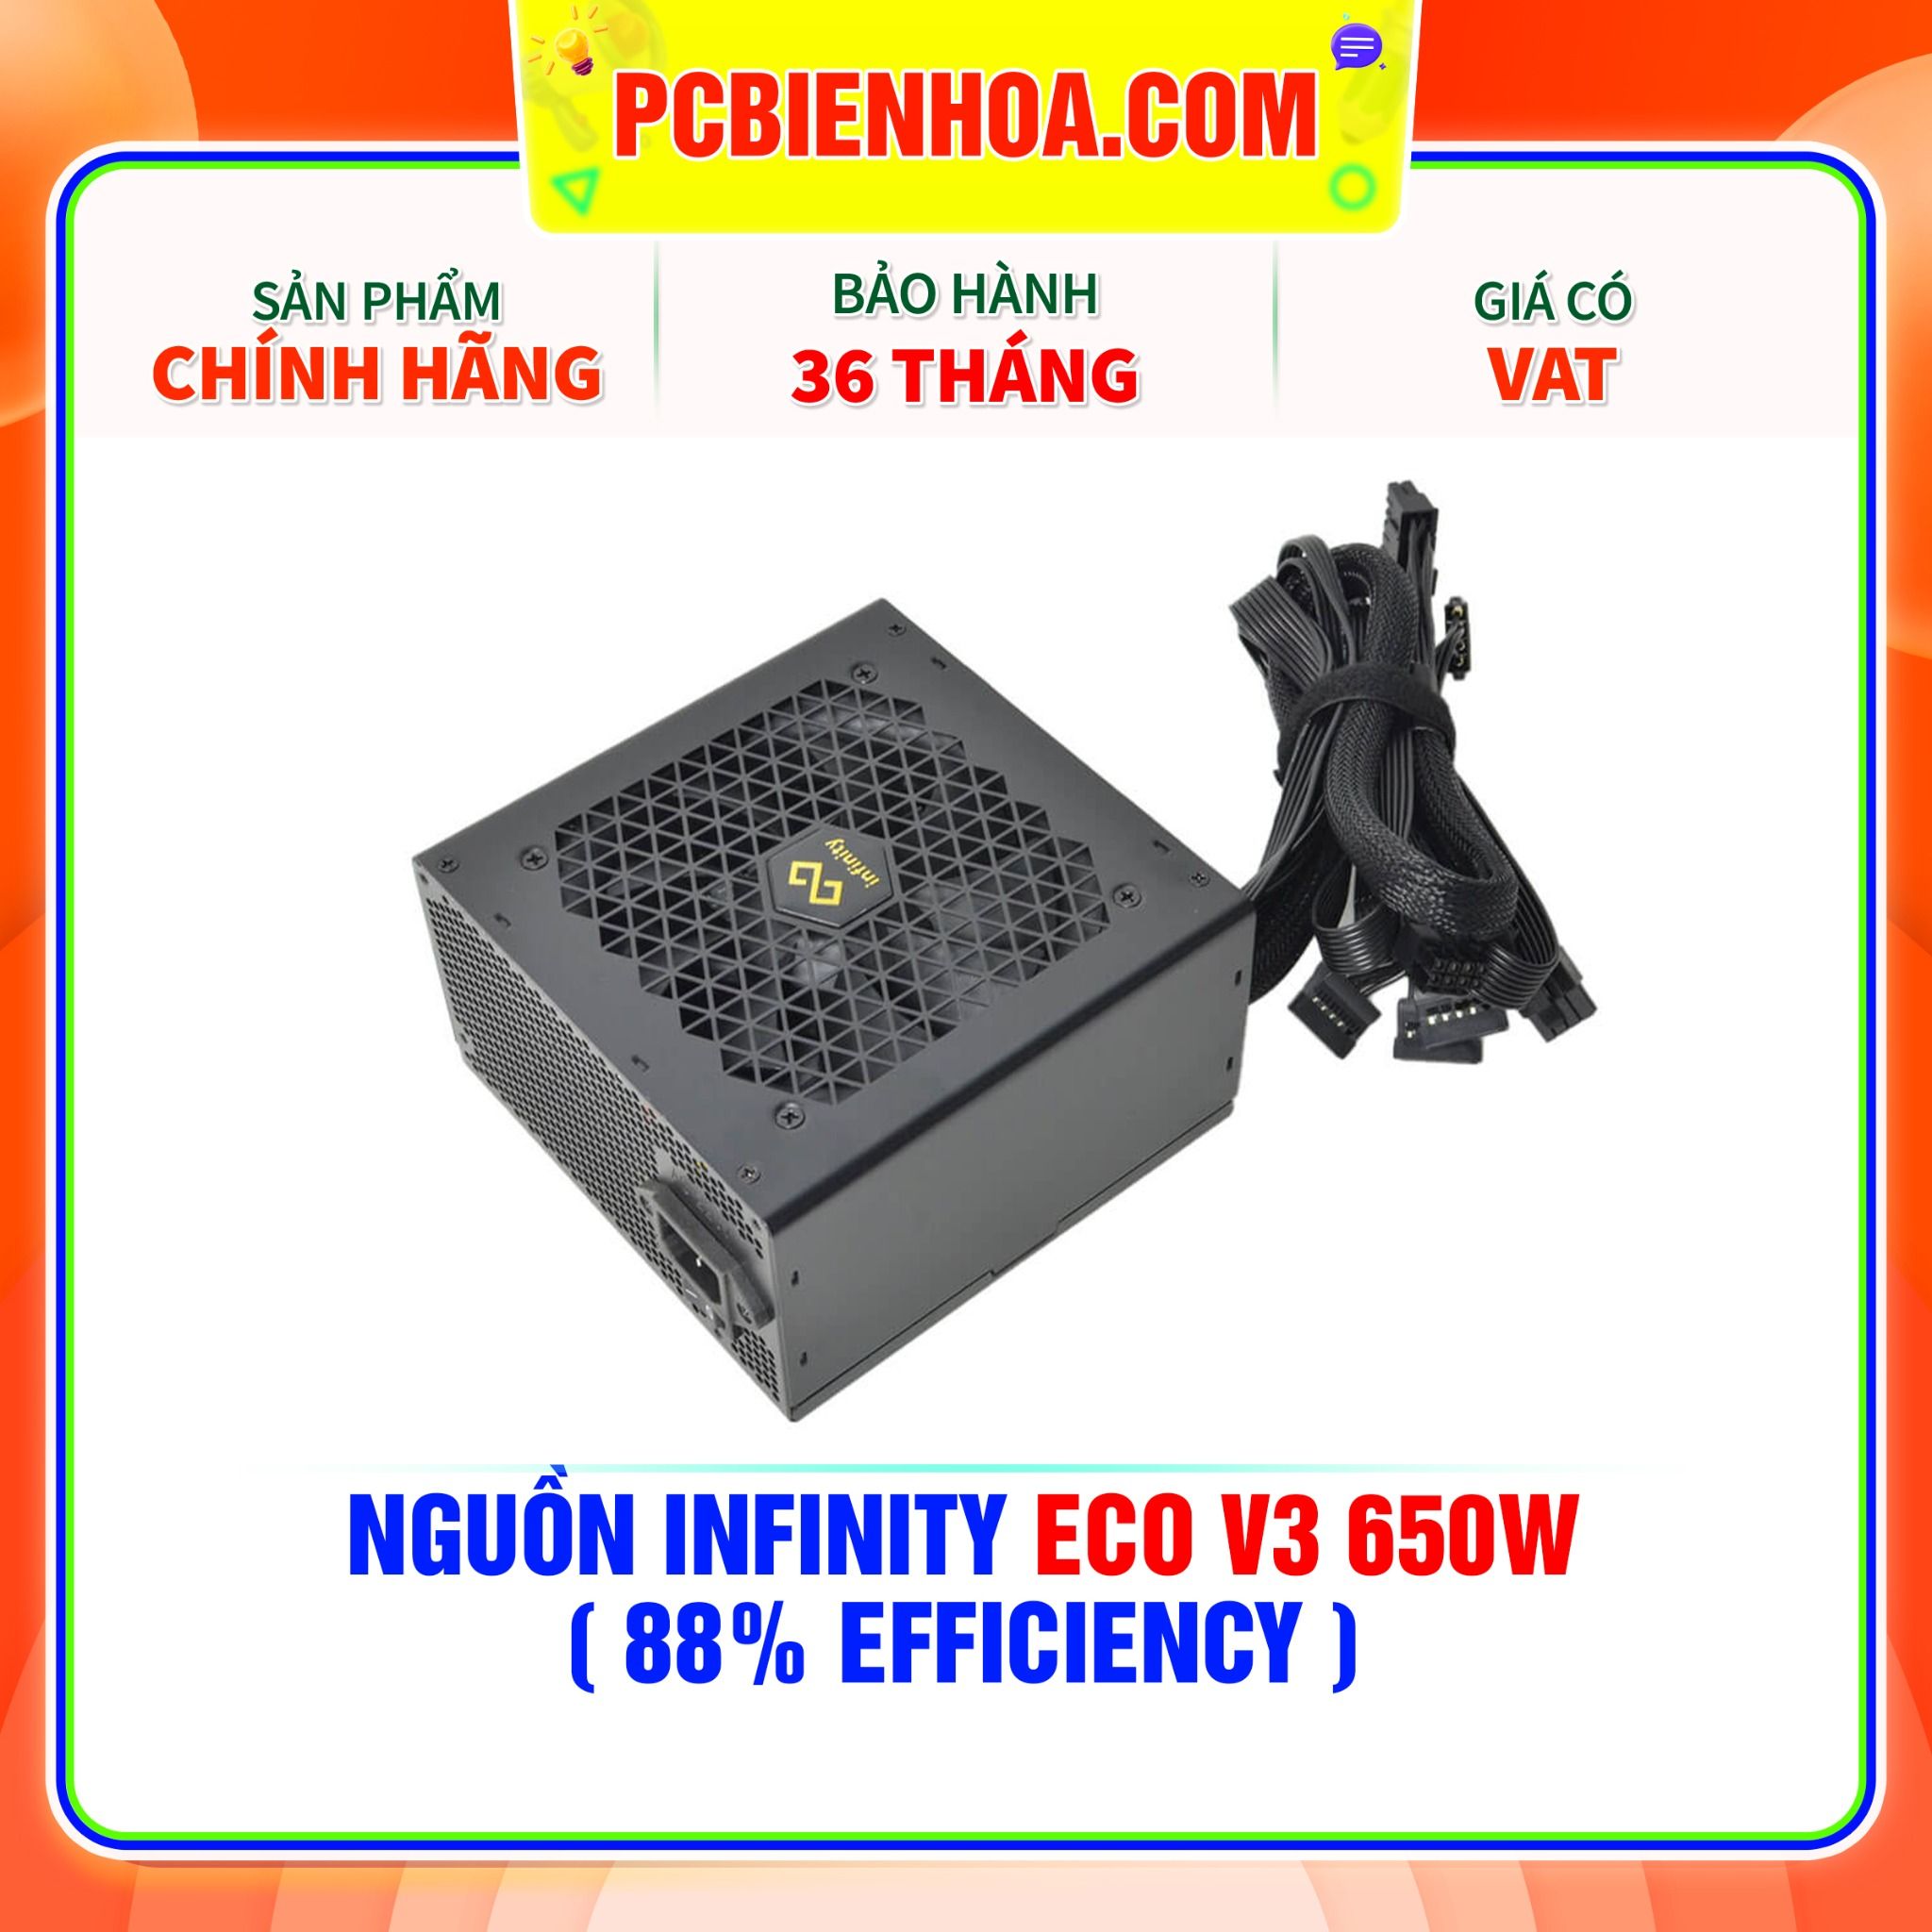  NGUỒN INFINITY ECO V3 650W ( 88% EFFICIENCY ) 